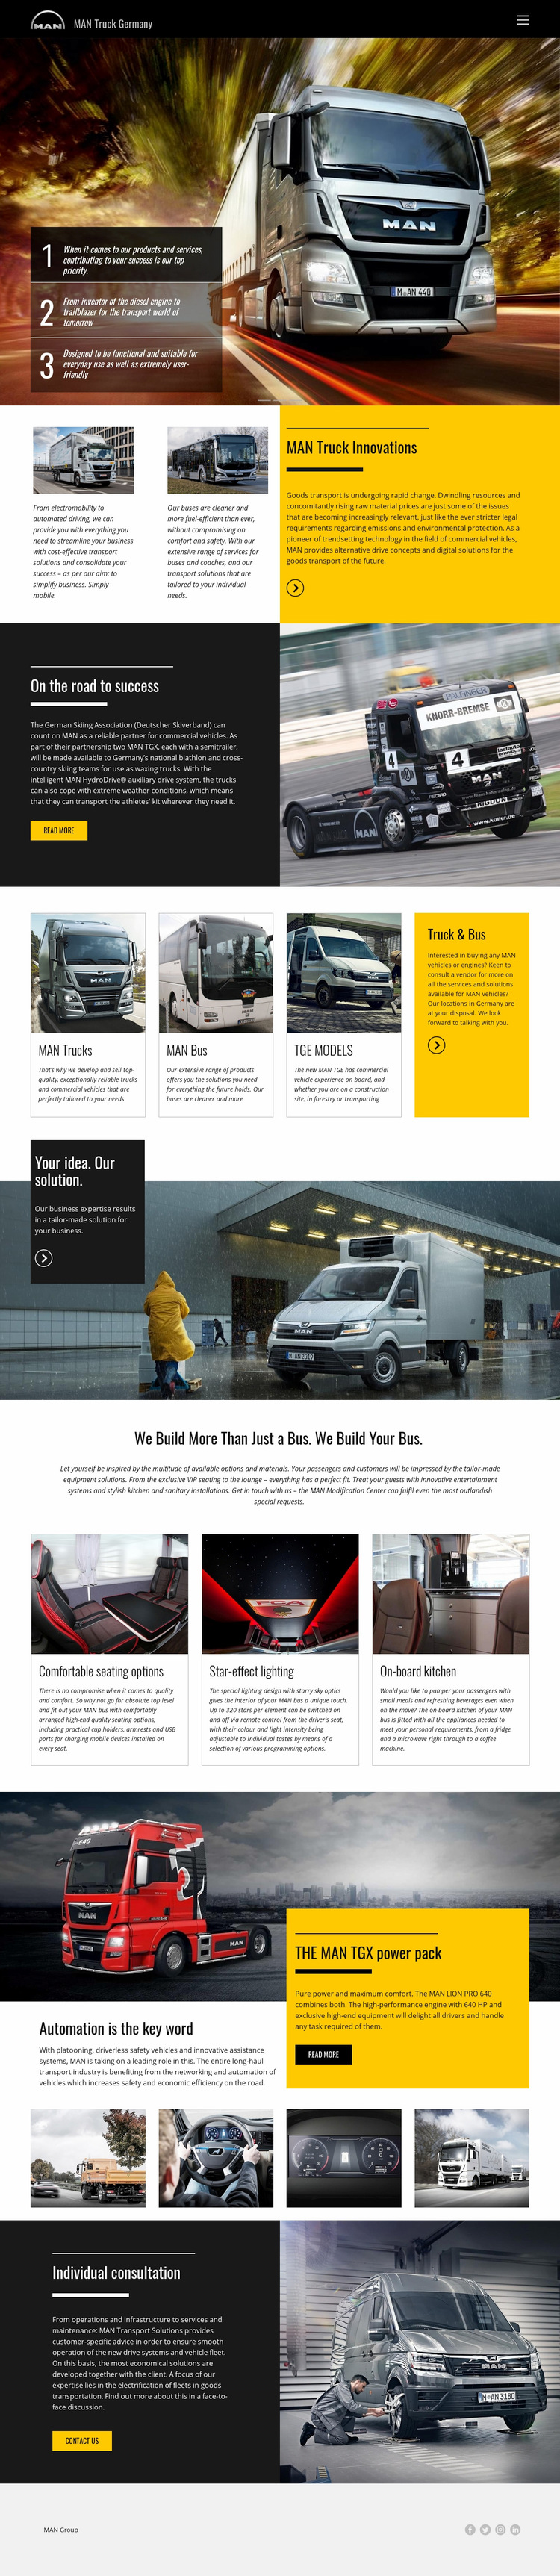 Man trucks for transportation WordPress Website